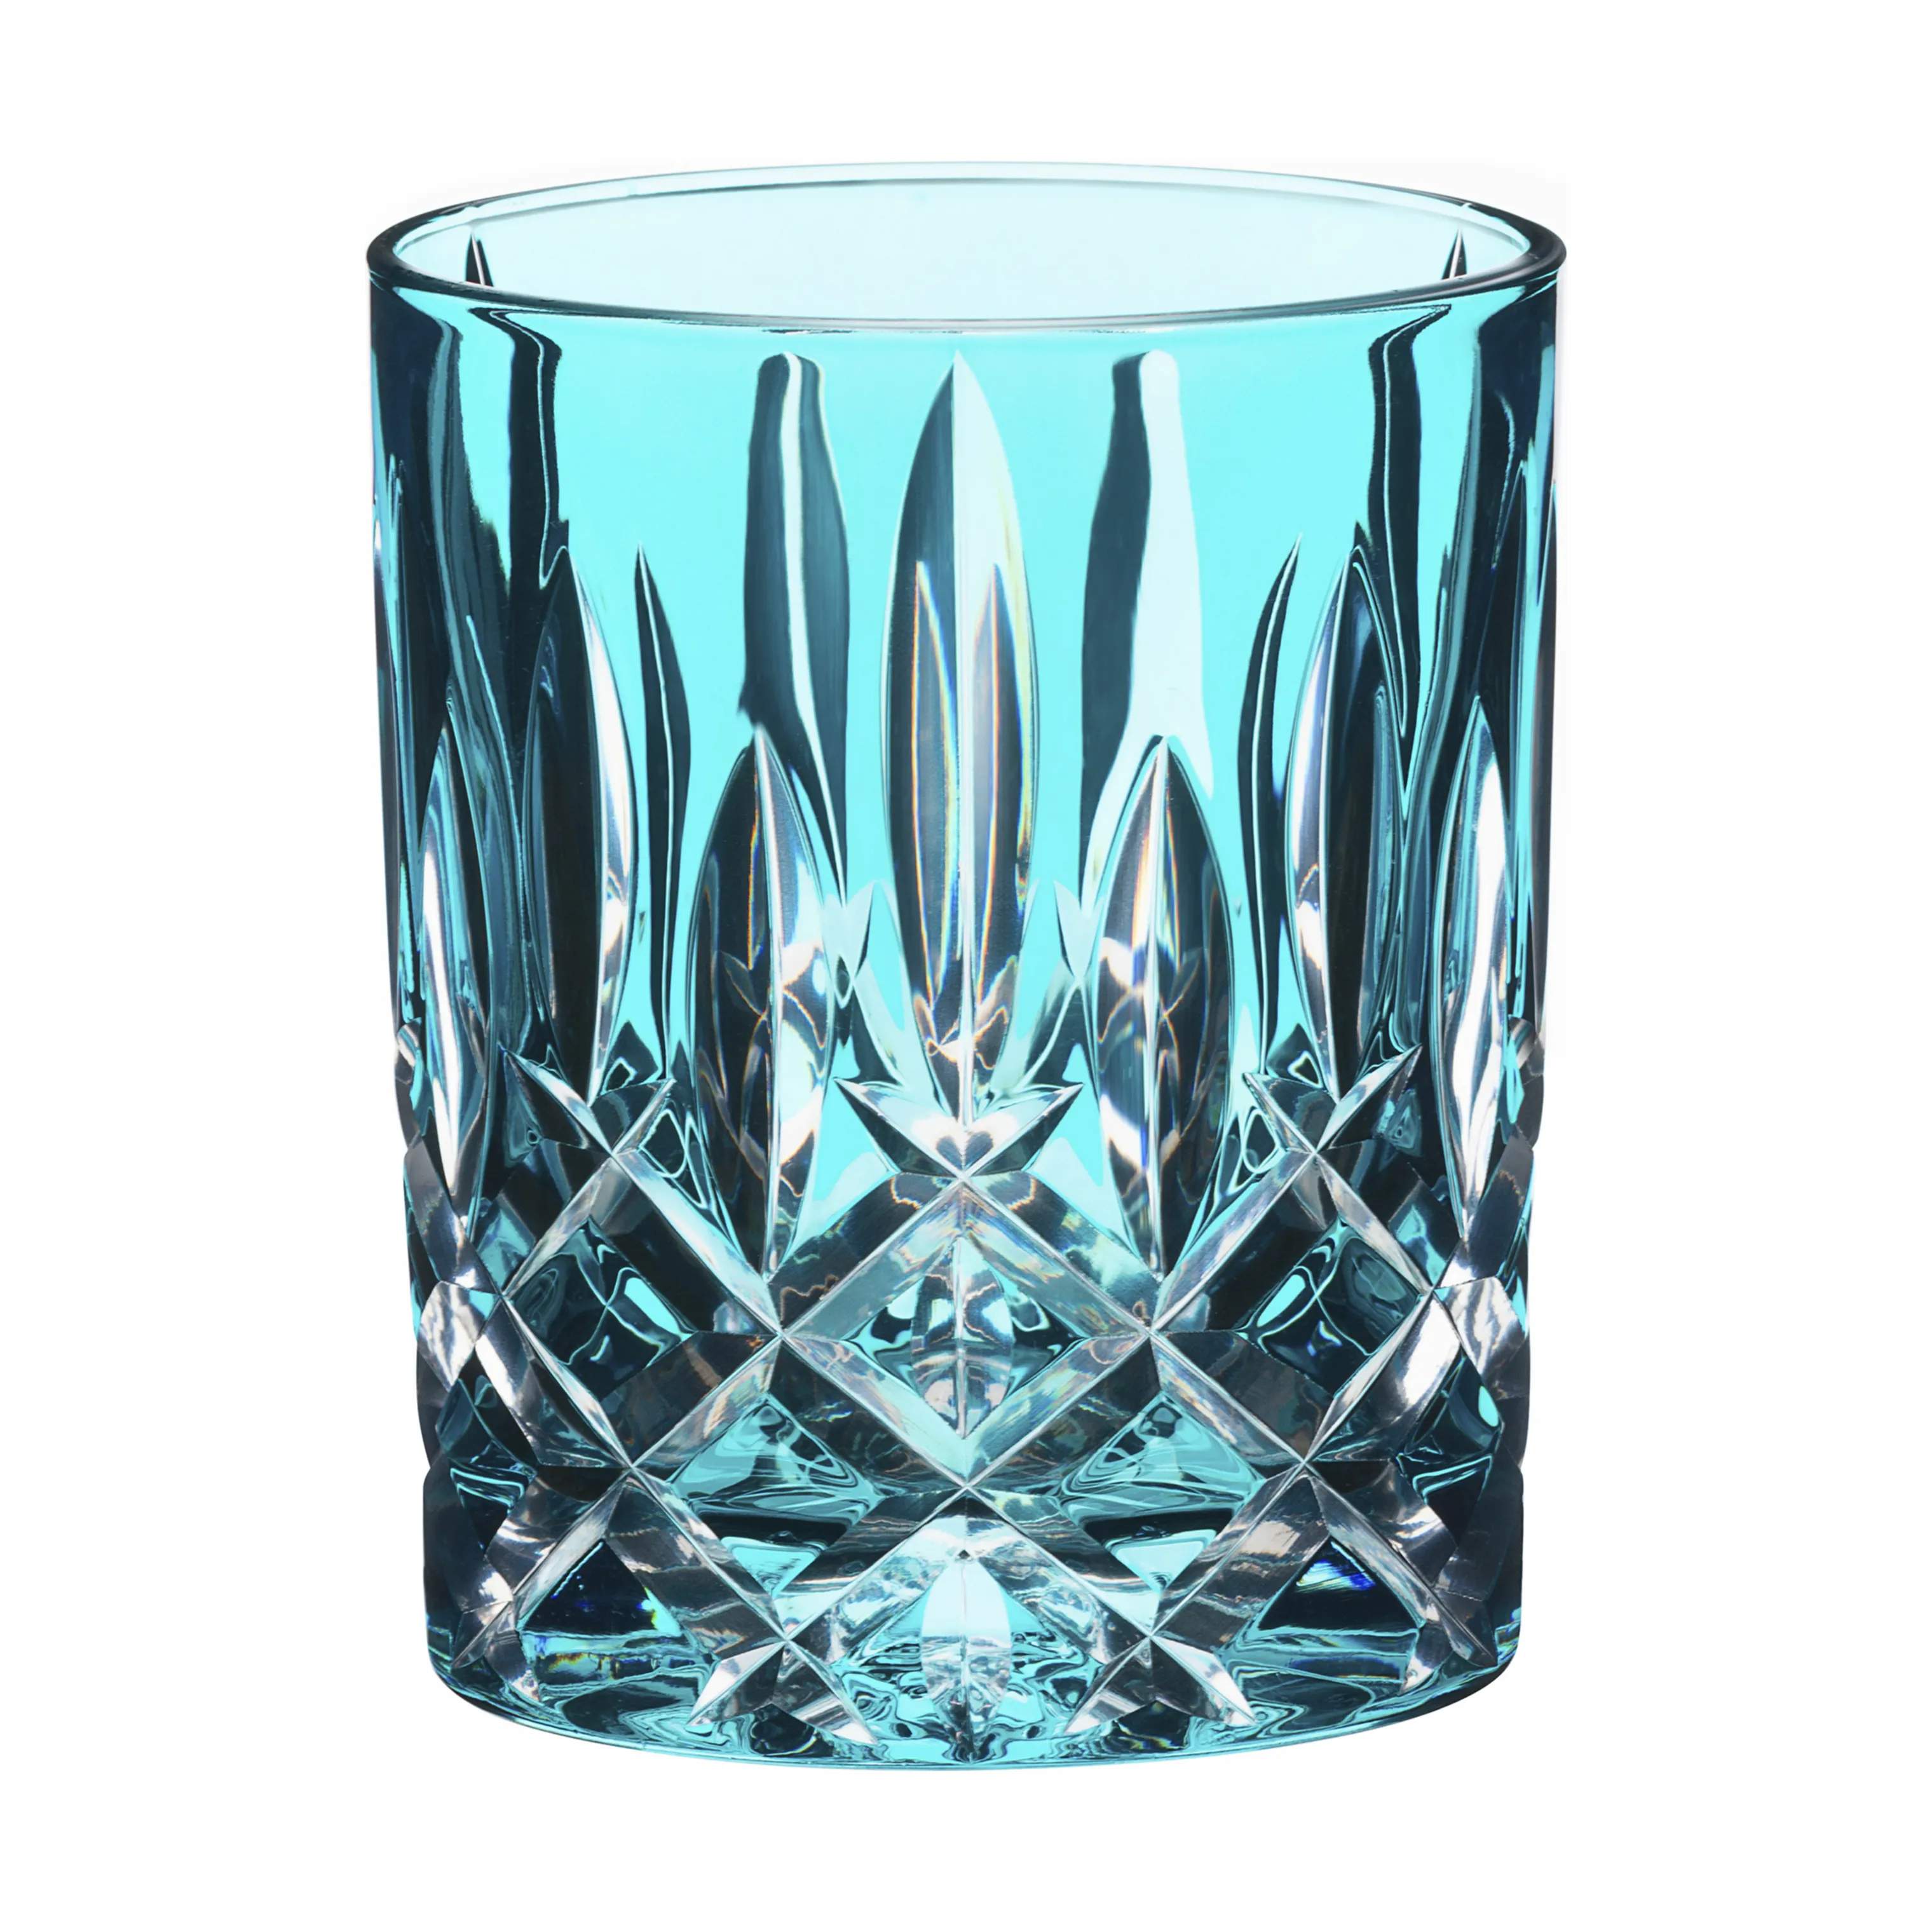 Laudon Vandglas, turquoise, large